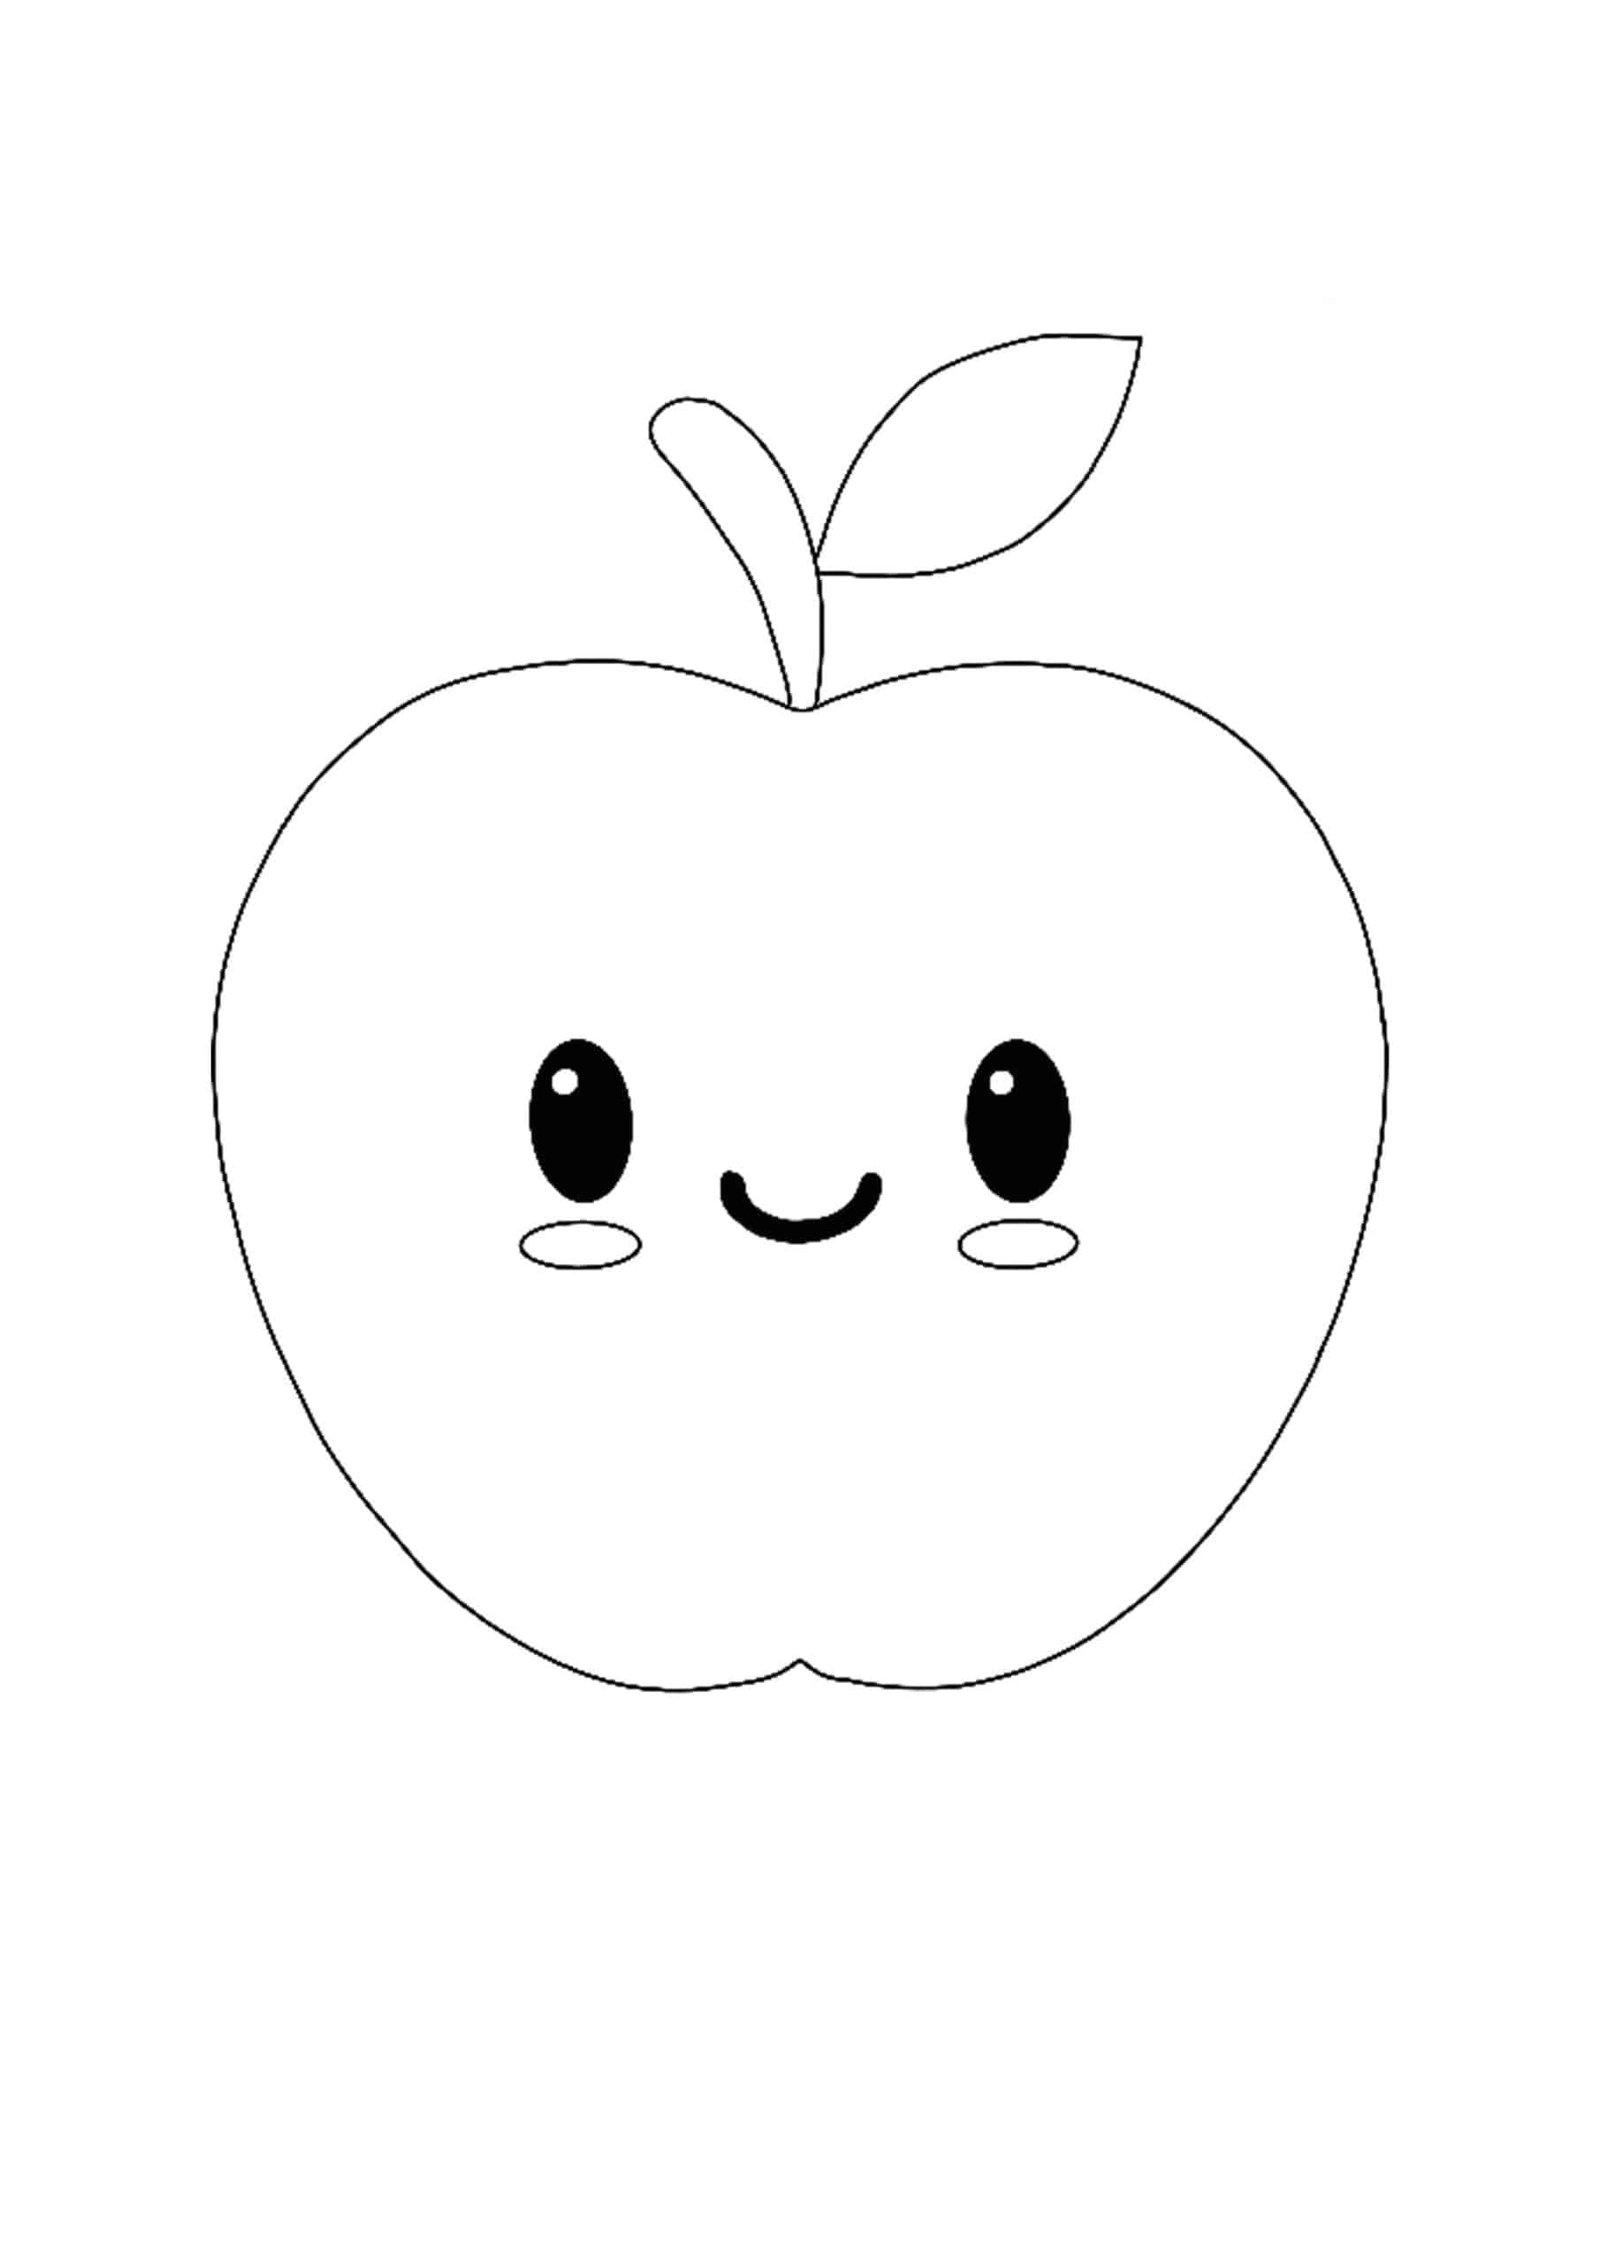 Kawaii Apple coloring page